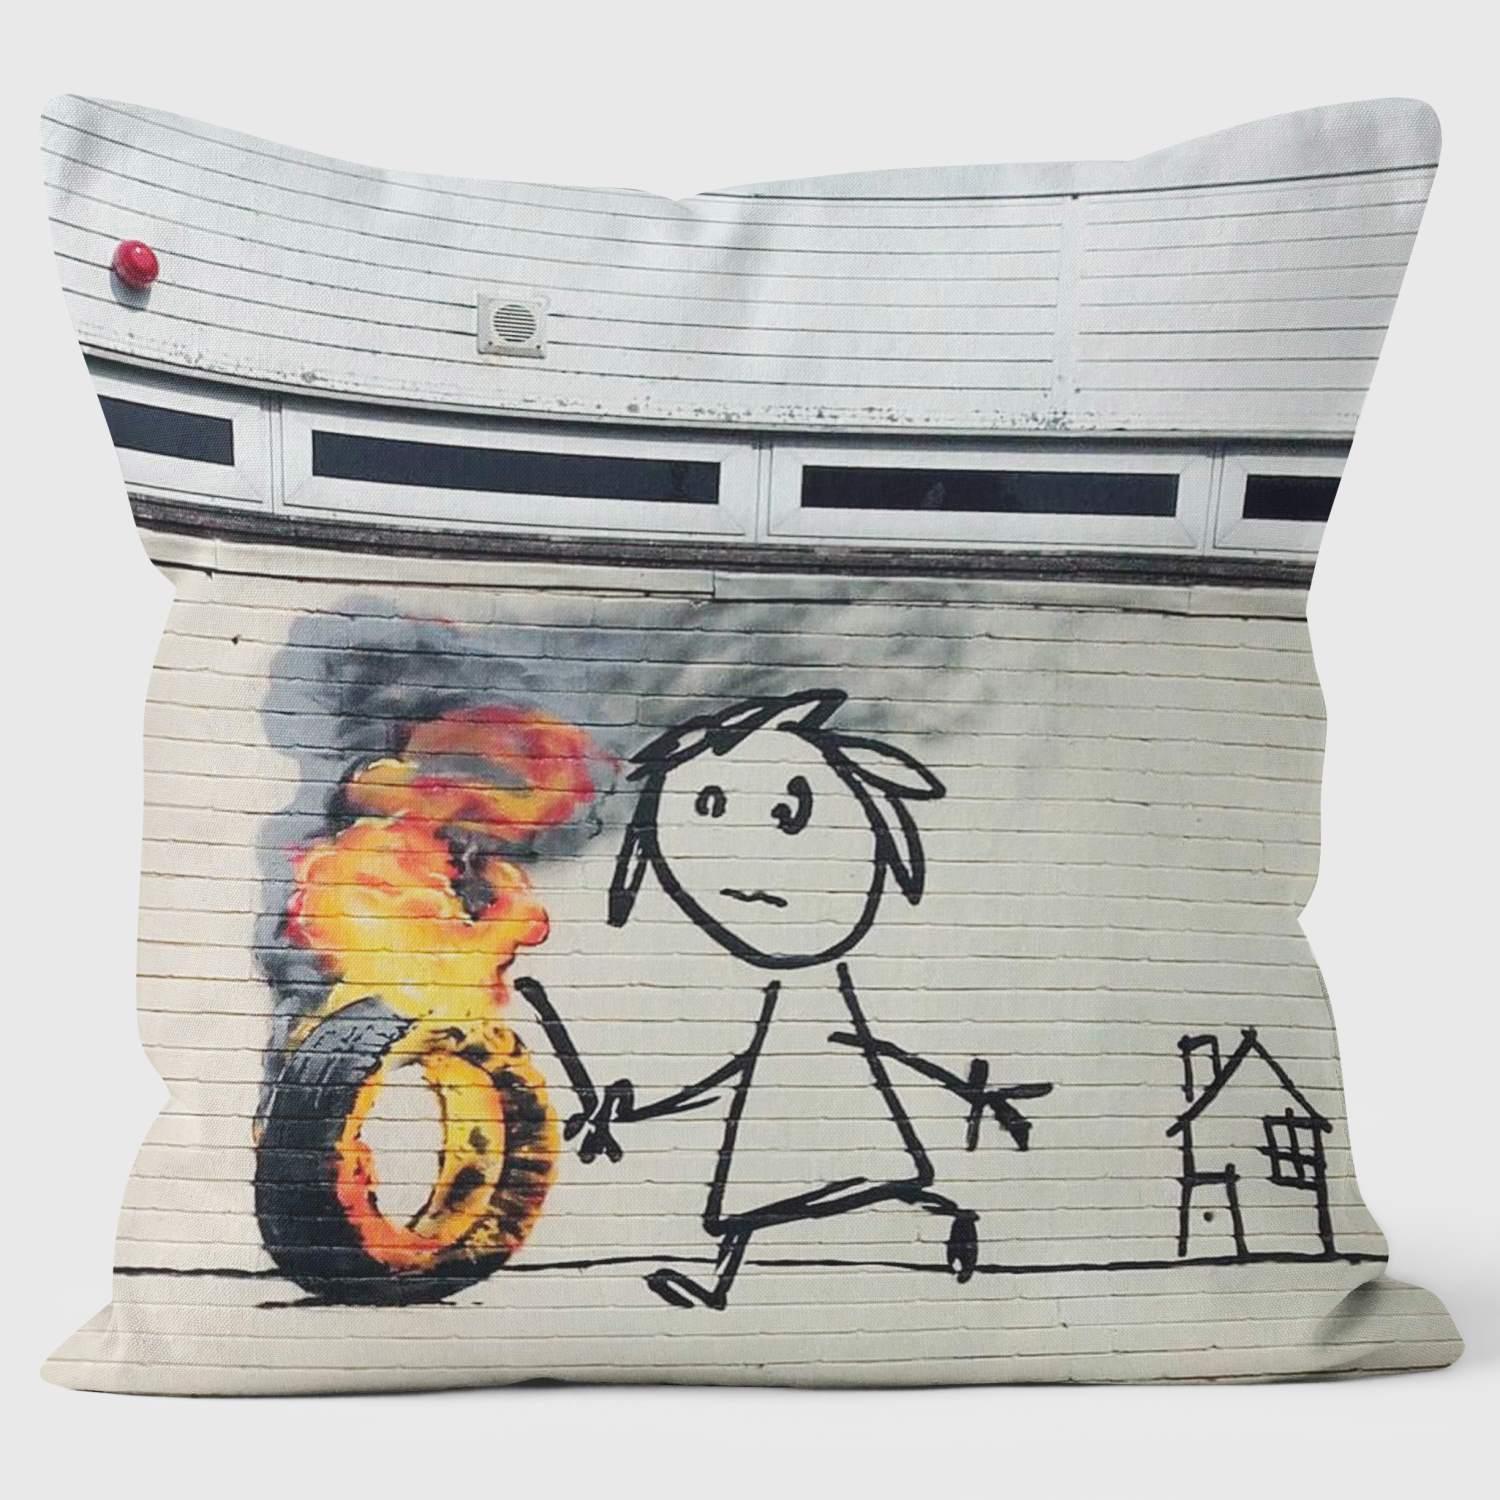 Burning Wheel - Banksy Inspired - Graffiti Art Cushion - Handmade Cushions UK - WeLoveCushions